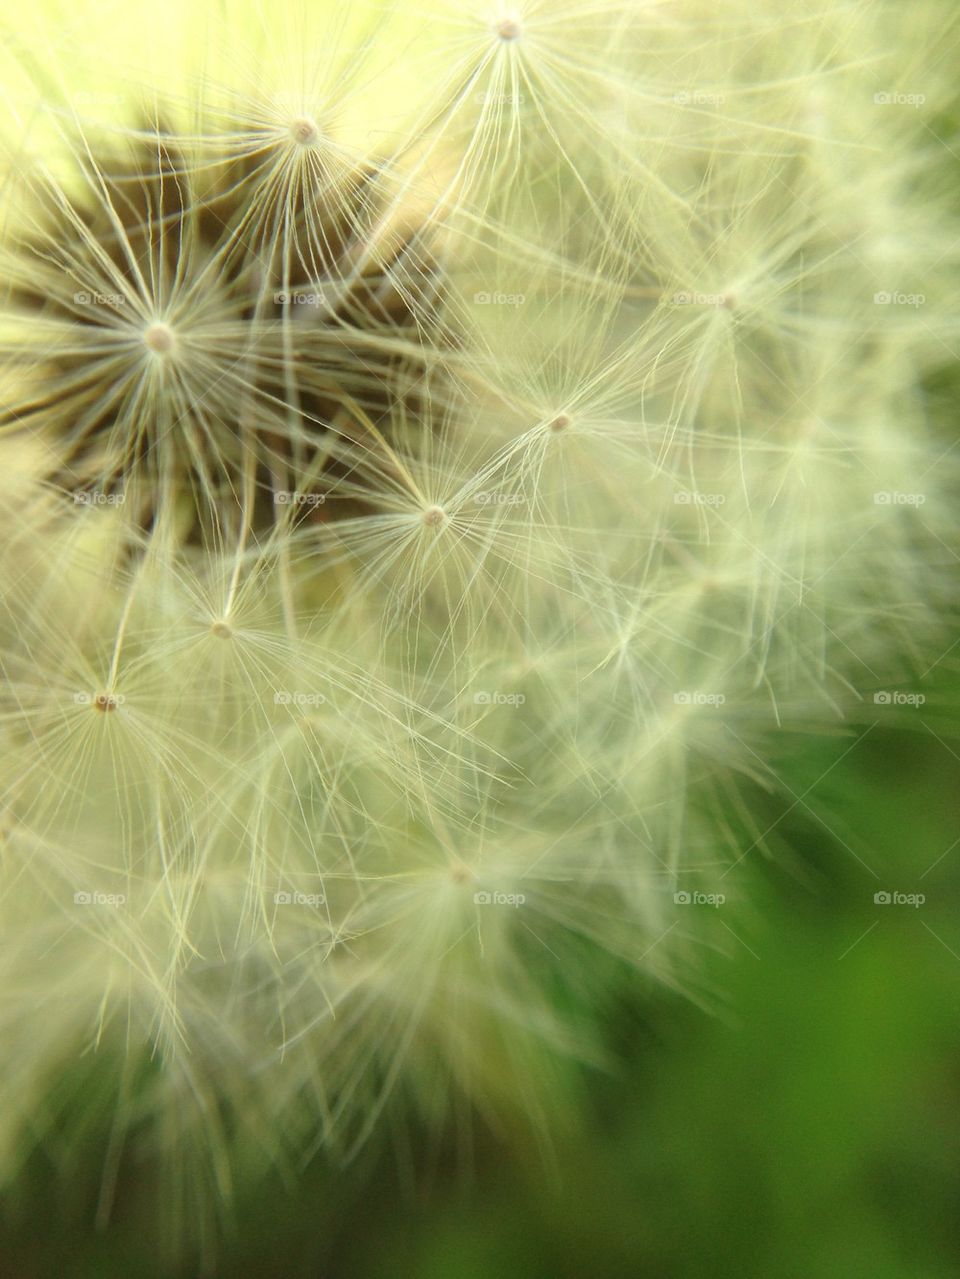 Extreme close up of dandelion flower